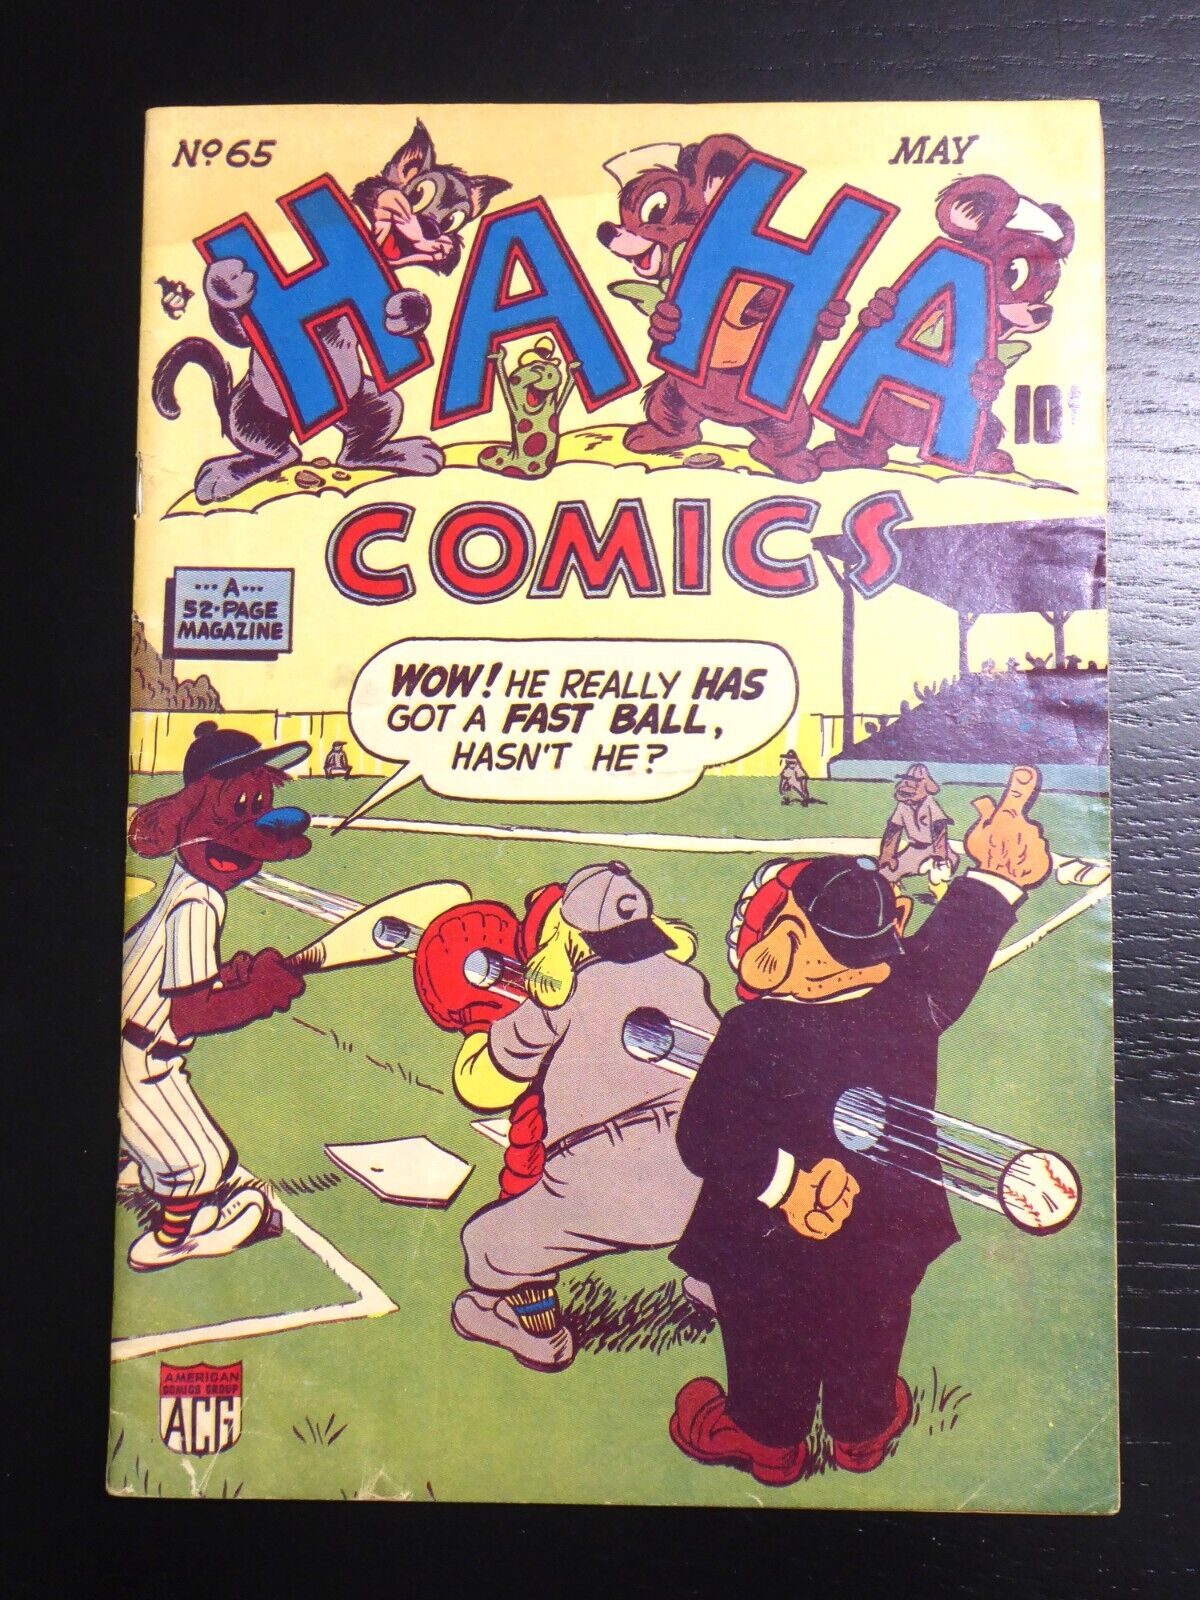 Ha Ha Comics #65 May 1949, VG+. Includes art by Dan Gordon, Baseball cover